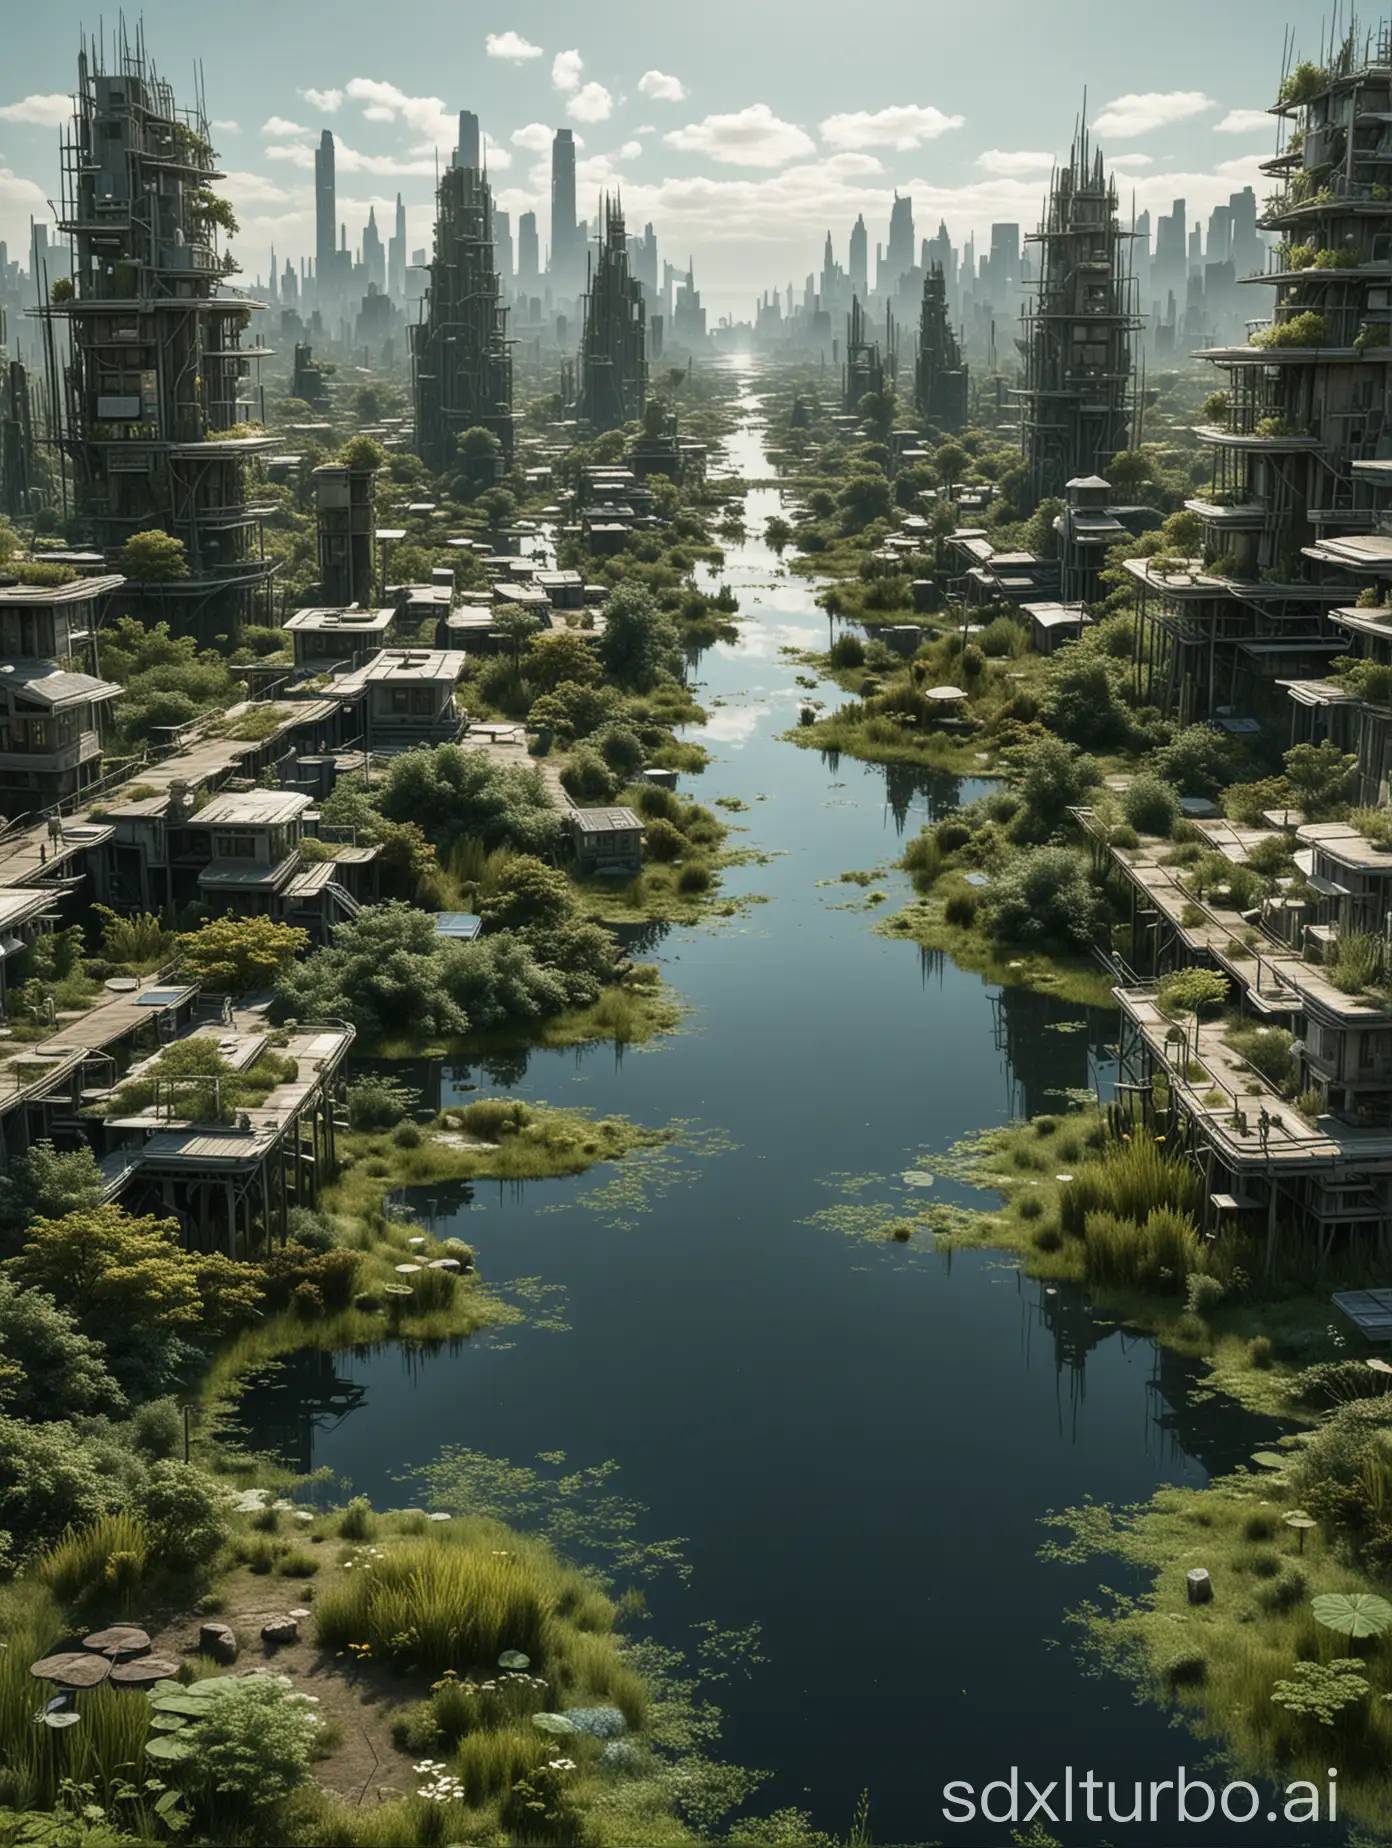 Futuristic-Utopian-Cityscape-Reflecting-in-Cybernetic-Wetland-Ecosystem